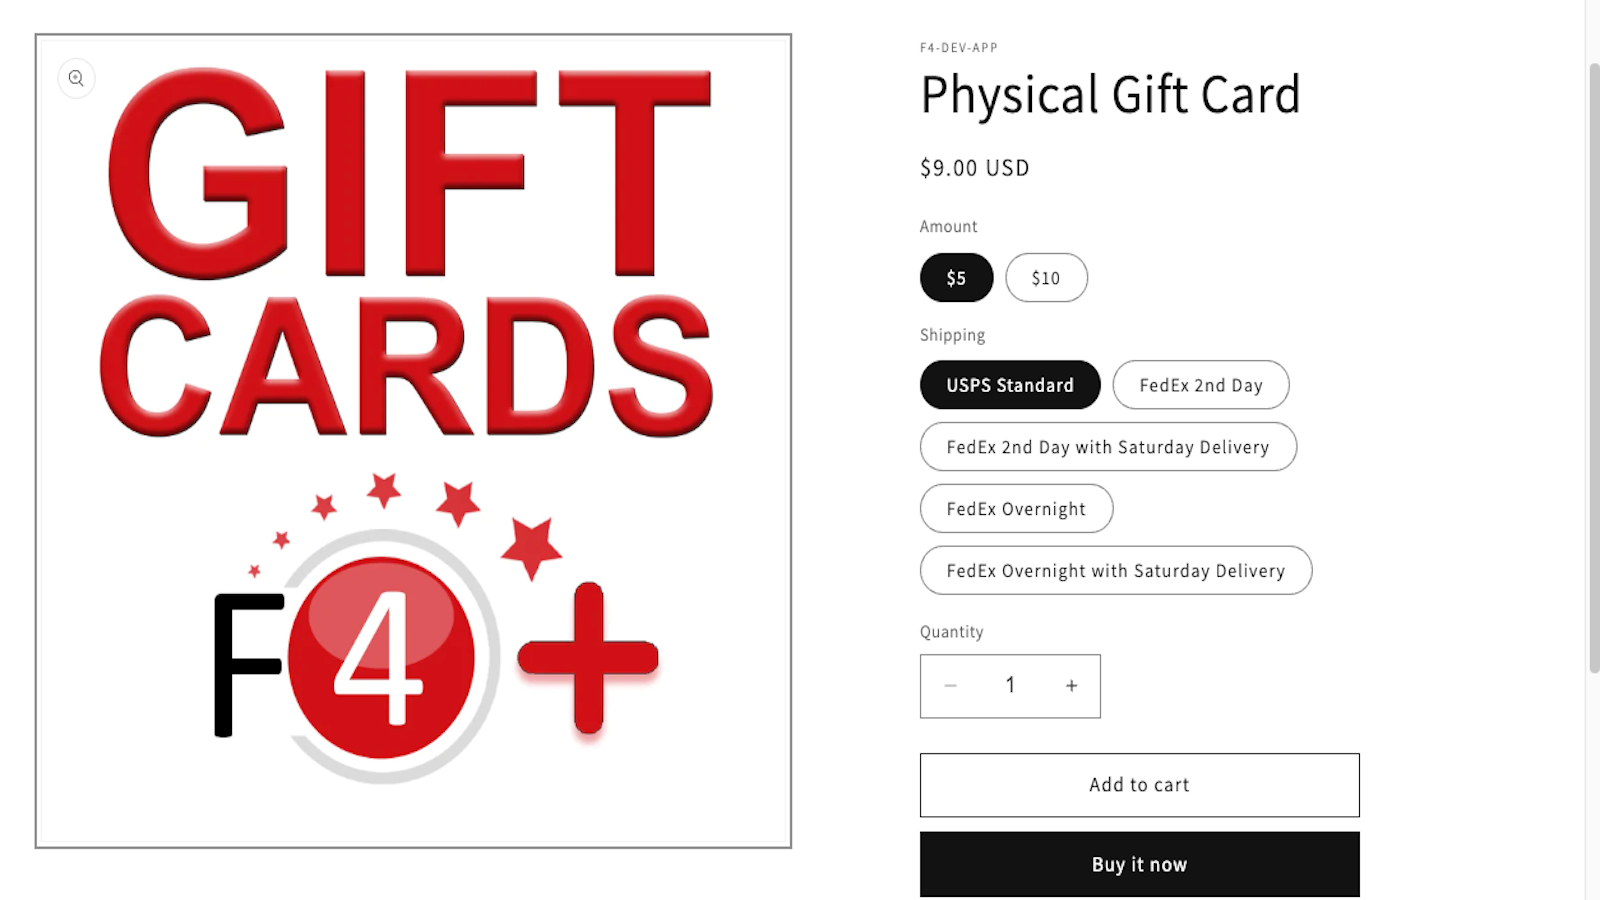 Sälj fysiska presentkort online!